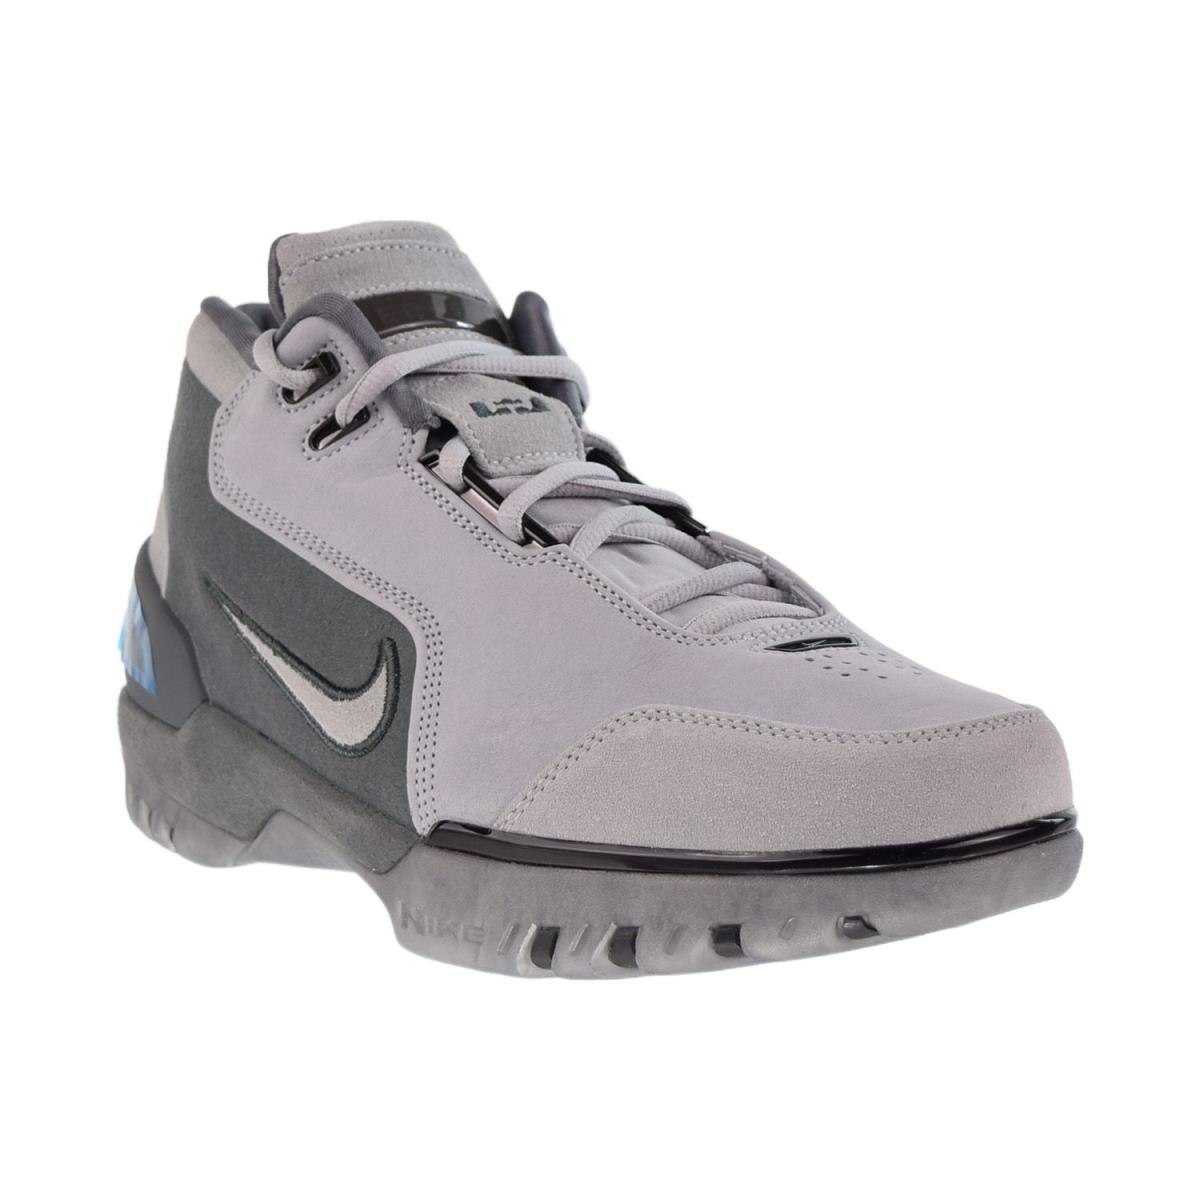 Nike Air Zoom Generation Men`s Shoes Dark Grey-wolf Grey-anthracite DR0455-001 - Dark Grey-Wolf Grey-Anthracite